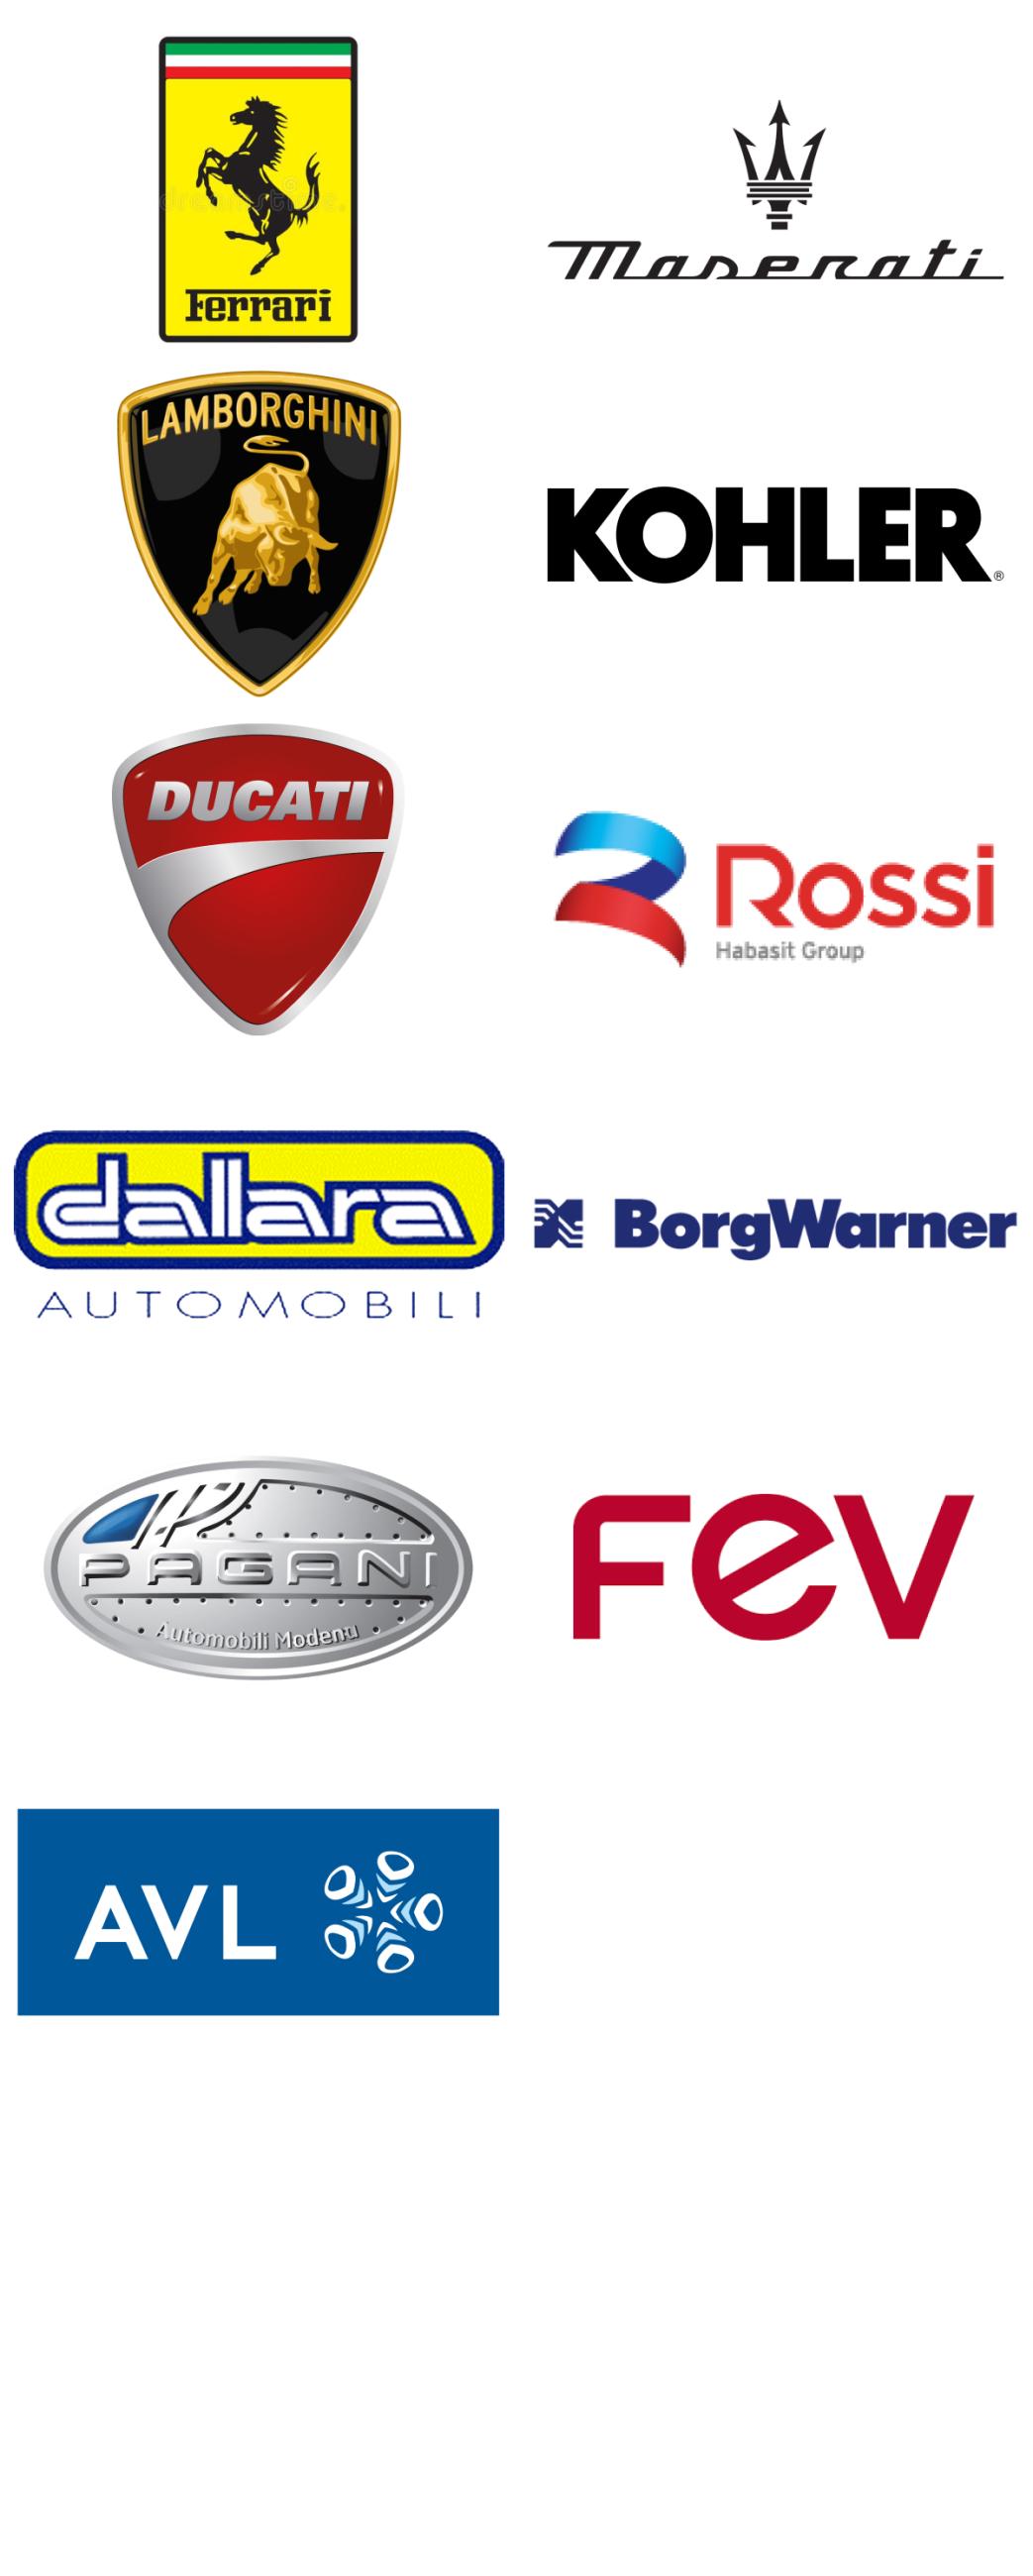 Immagini top brand mechanical colonna 1: Ferrari, Maserati, Lamborghini, Kohler, Ducati, Rossi, Dallara, Pagani, BorgWarner, AVL, FEV.